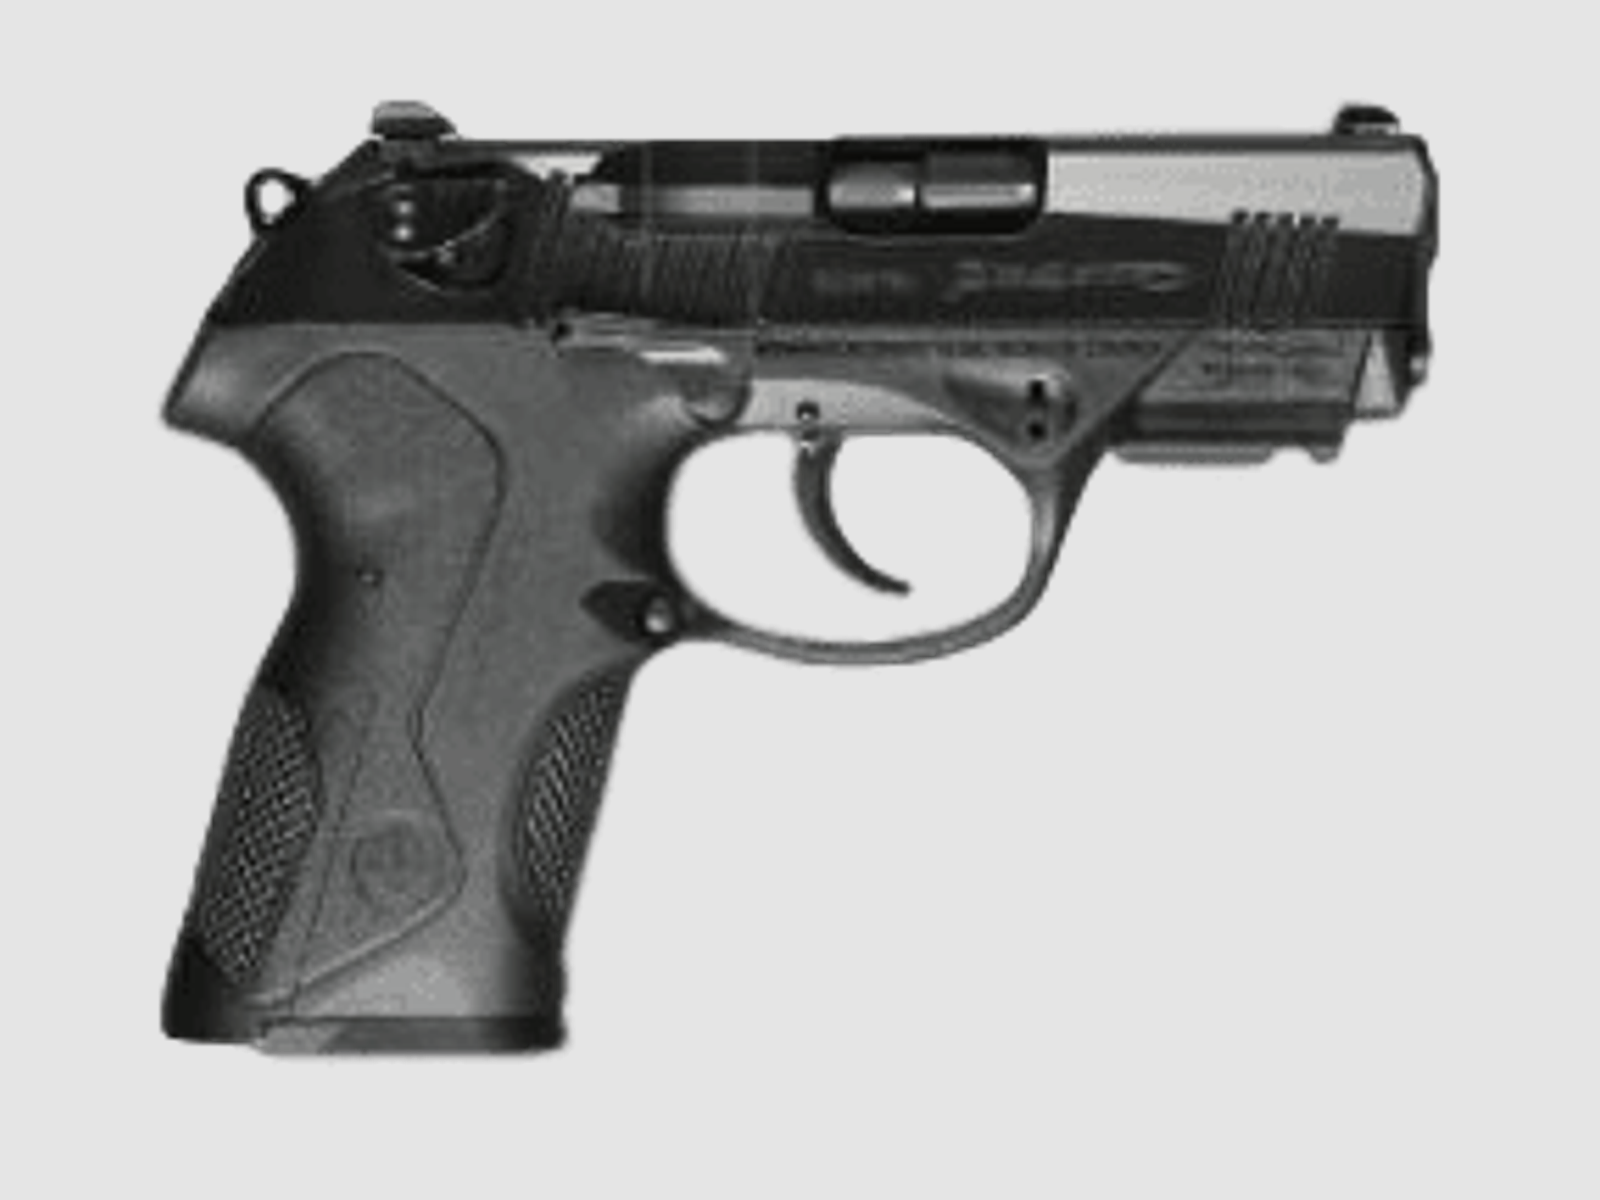 Beretta Px4 Storm Compact .40 S&W Pistole